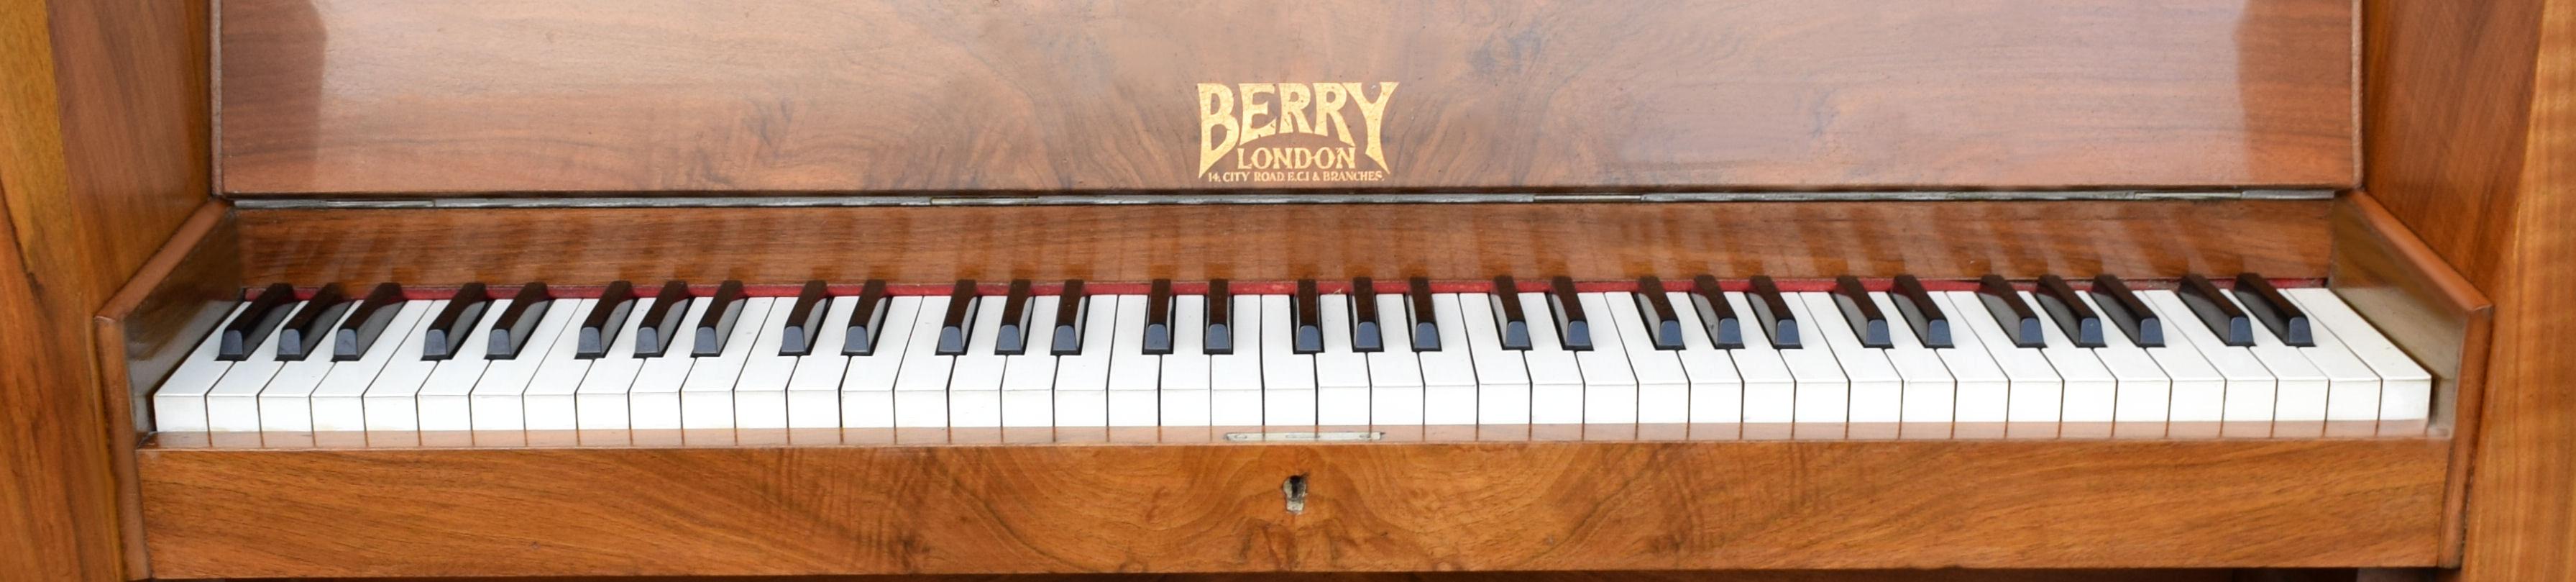 nathaniel berry piano